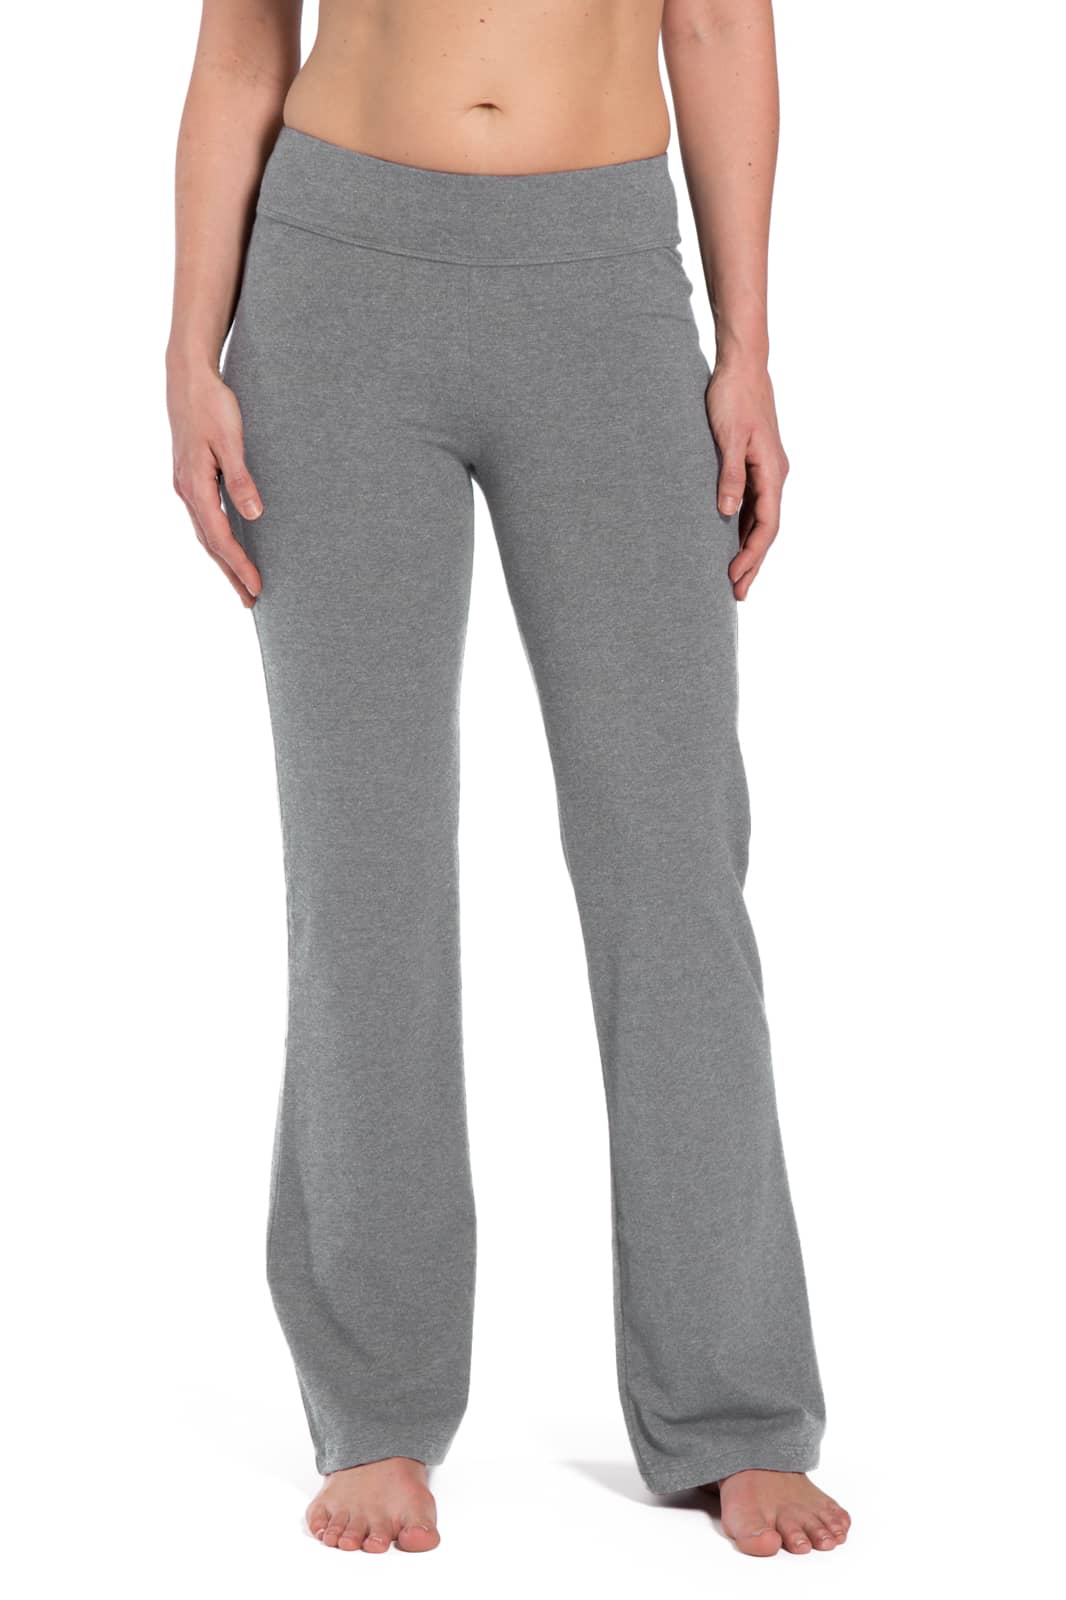 PHISOCKAT Women's Yoga Pants with Pockets, High Waist Tummy Gray Size Small